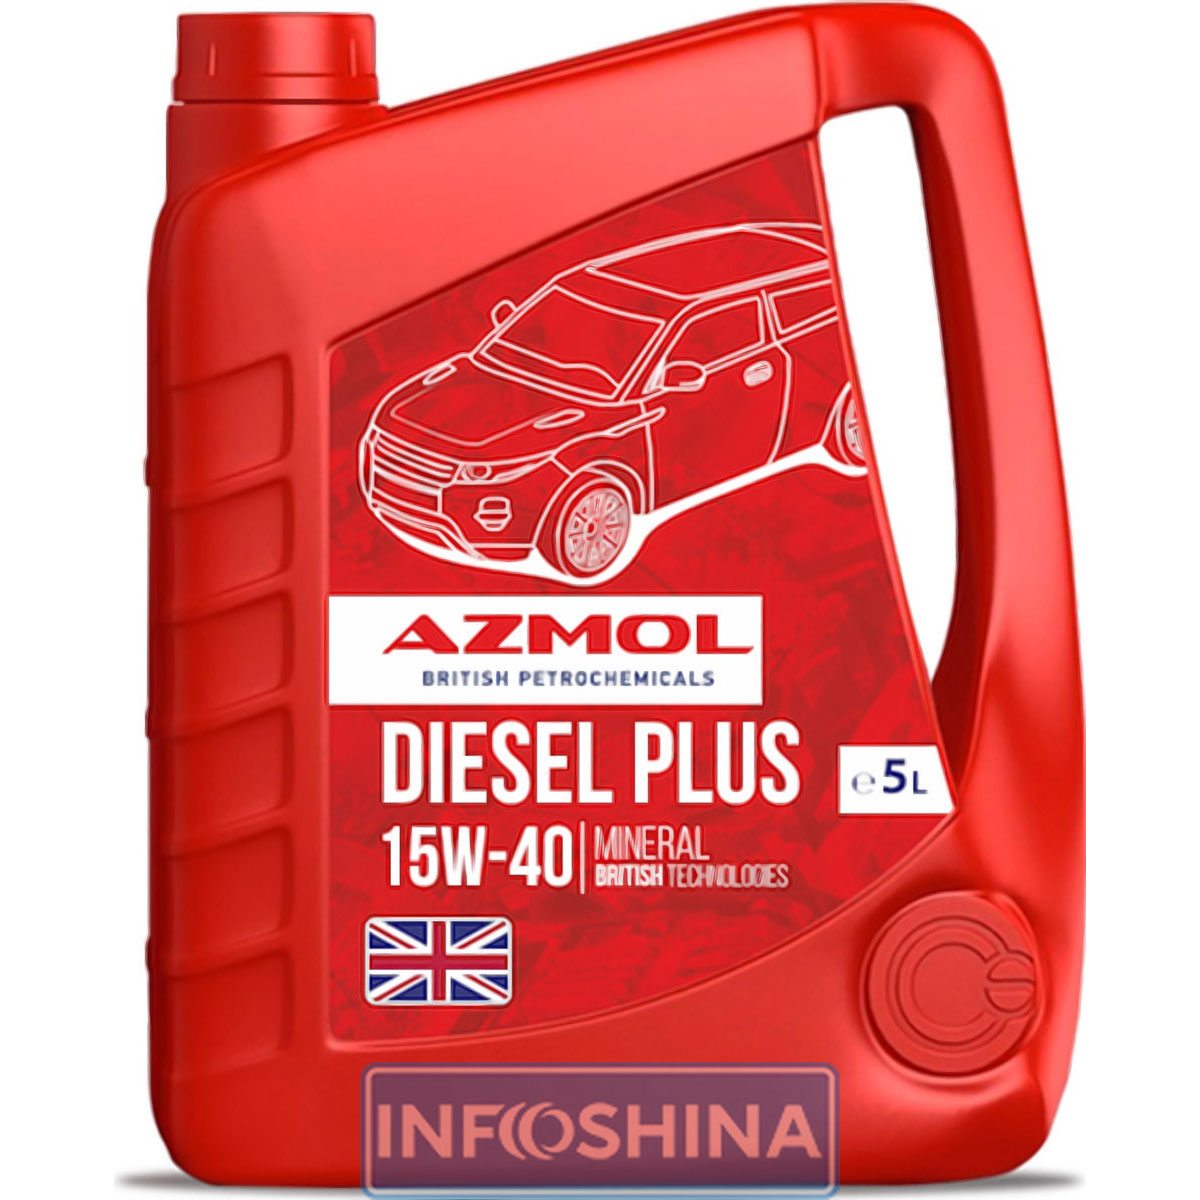 Azmol Diesel Plus 15W-40